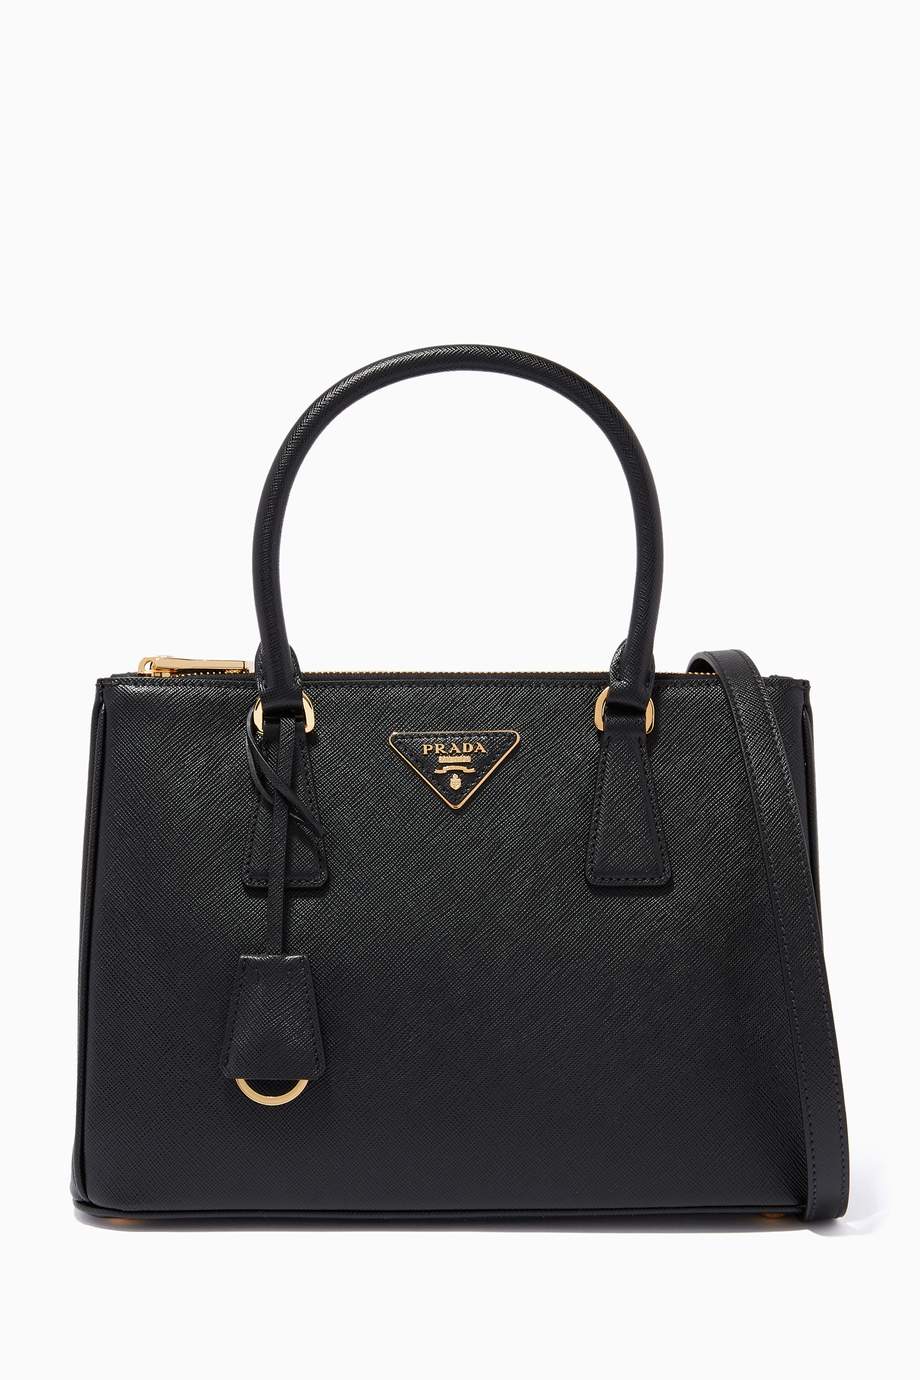 Shop Prada Black Small Galleria Bag in Saffiano Leather for Women | Ounass UAE